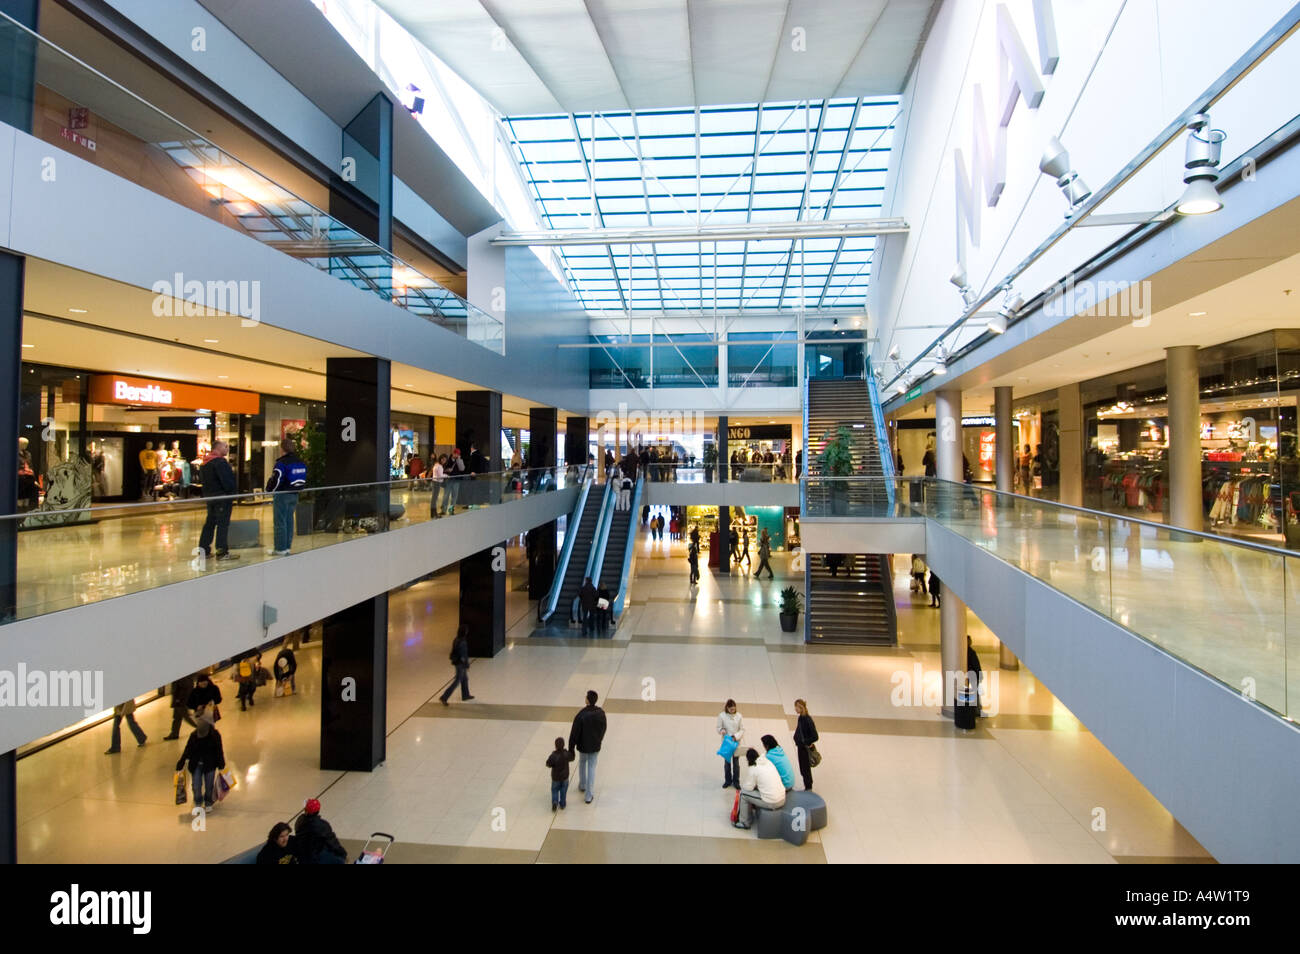 Interior mall maremagnum port e imágenes alta - Alamy